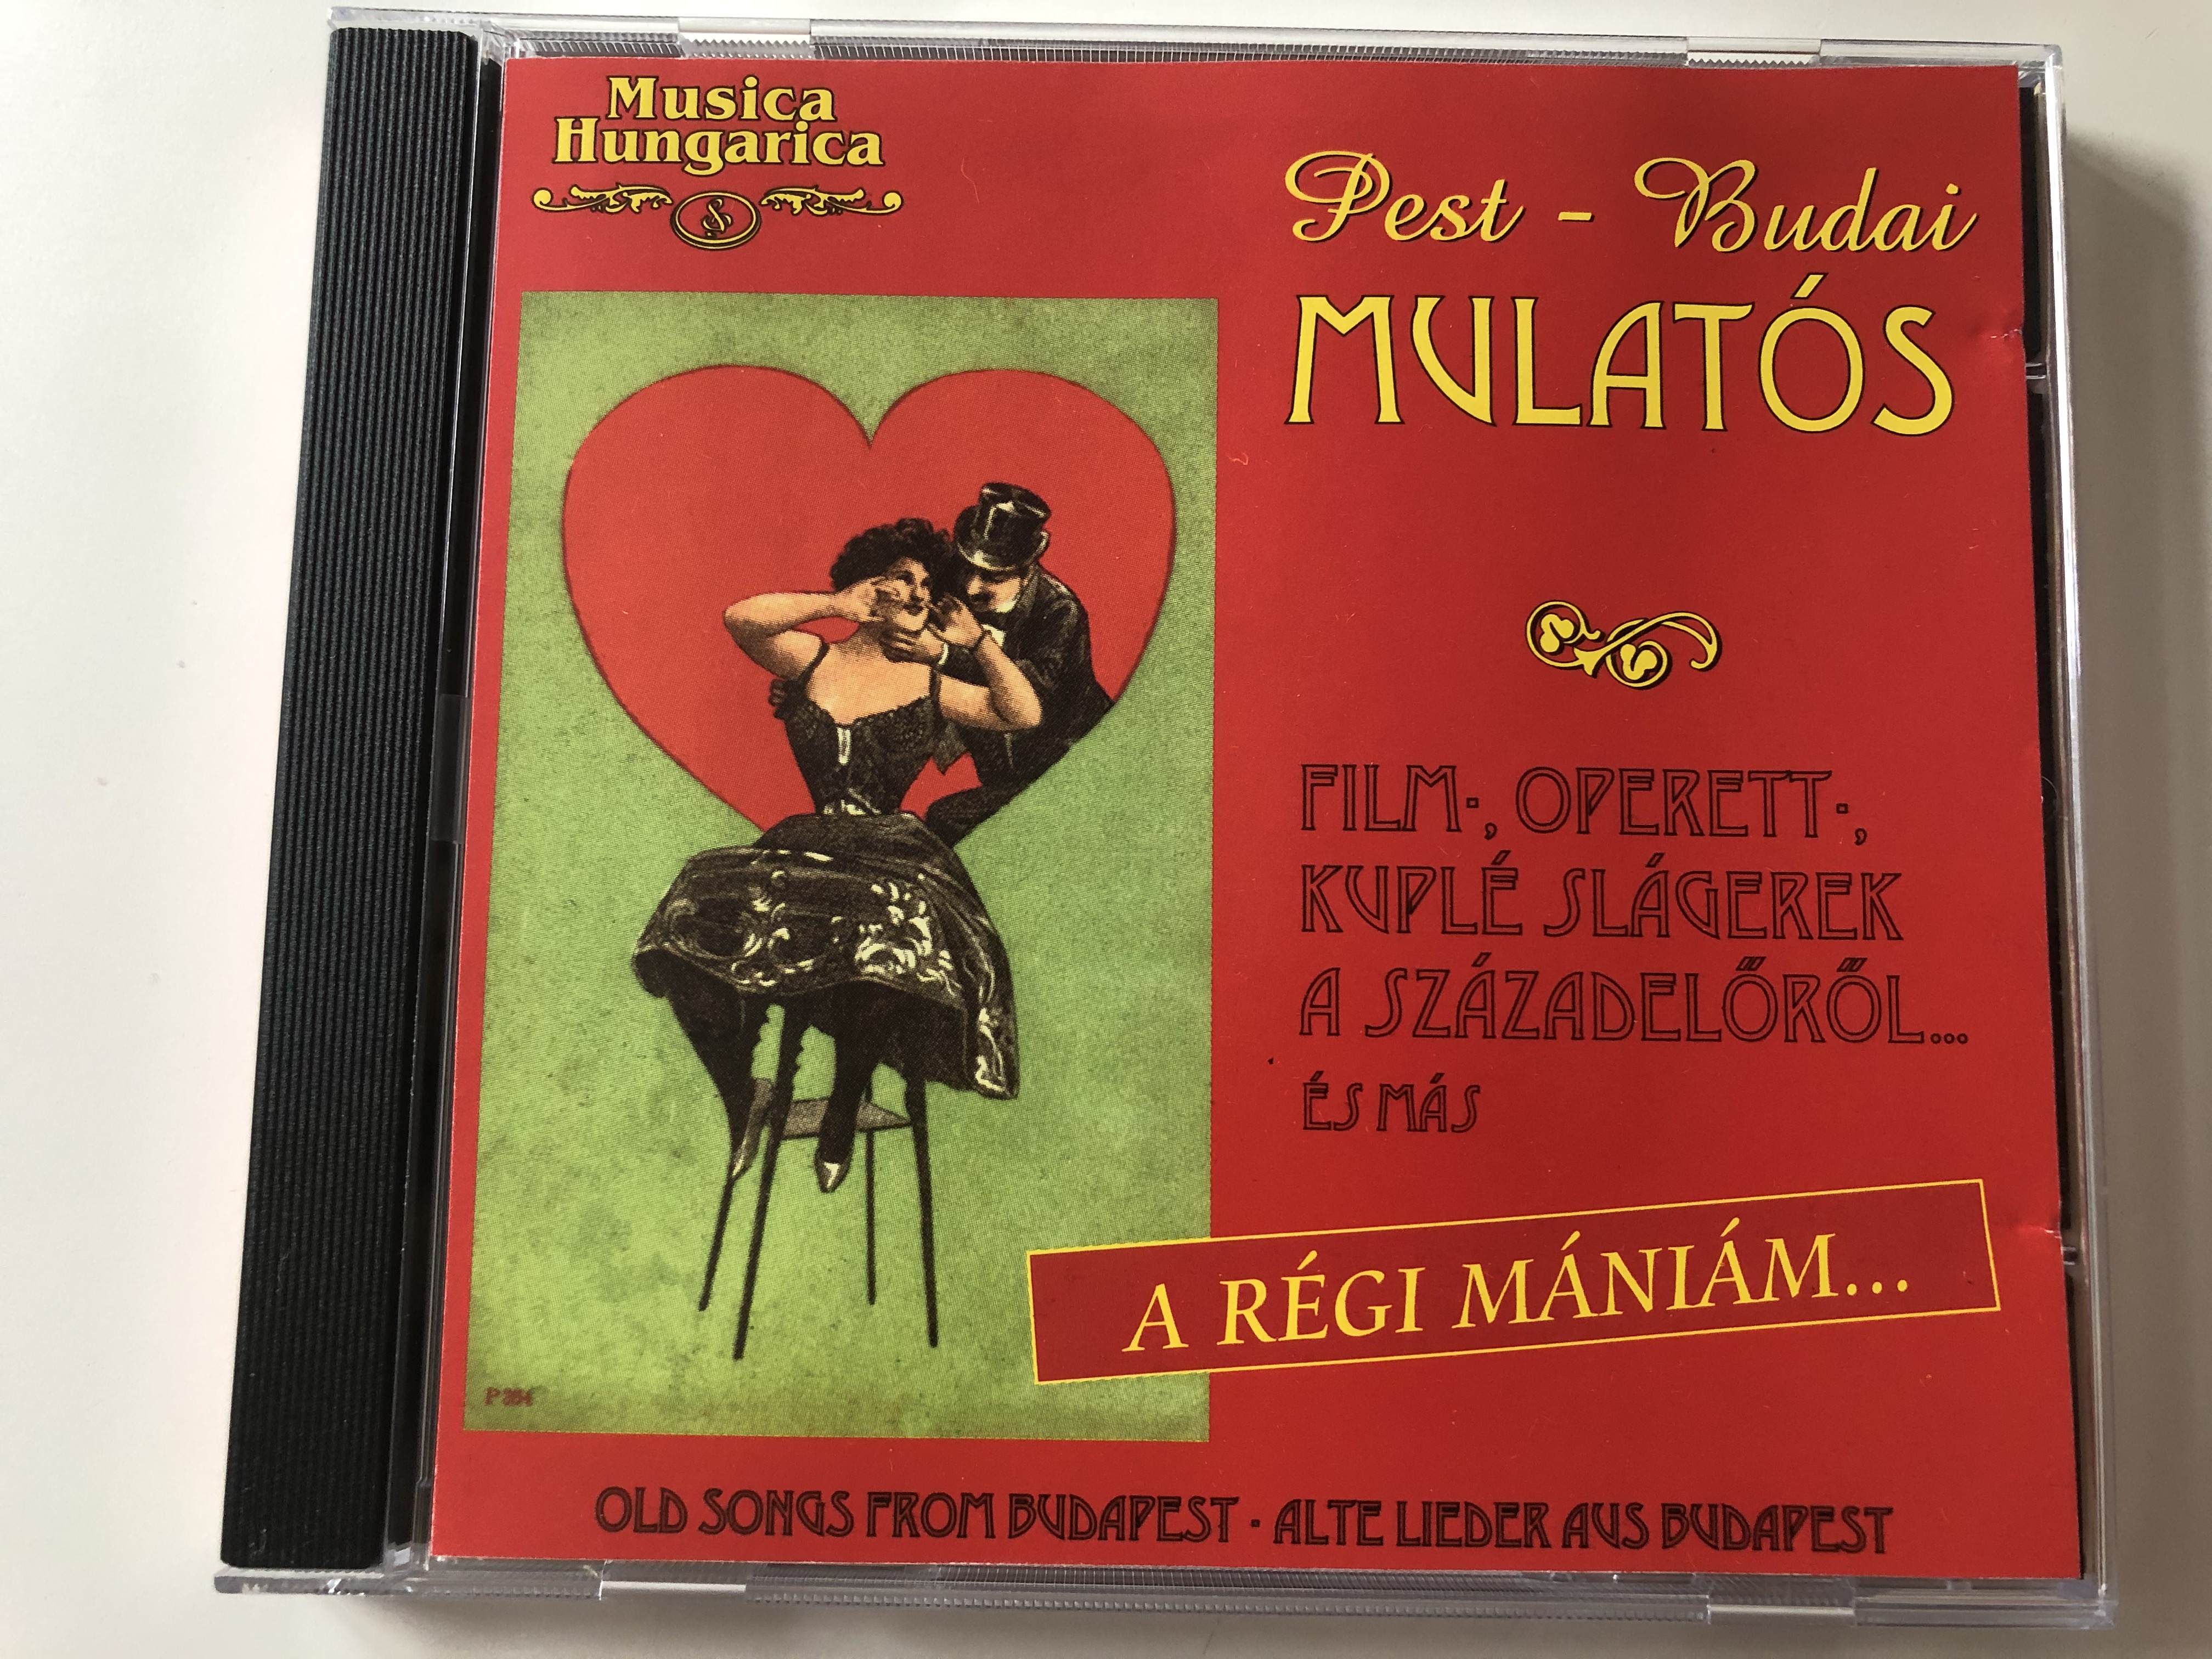 pest-budai-mulat-s-film-operett-kupl-sl-gerek-a-sz-zadel-r-l...-s-m-s-a-regi-maniam...-old-songs-from-budapest-alte-lieder-aus-budapest-musica-hungarica-audio-cd-2000-mha-082-1-.jpg